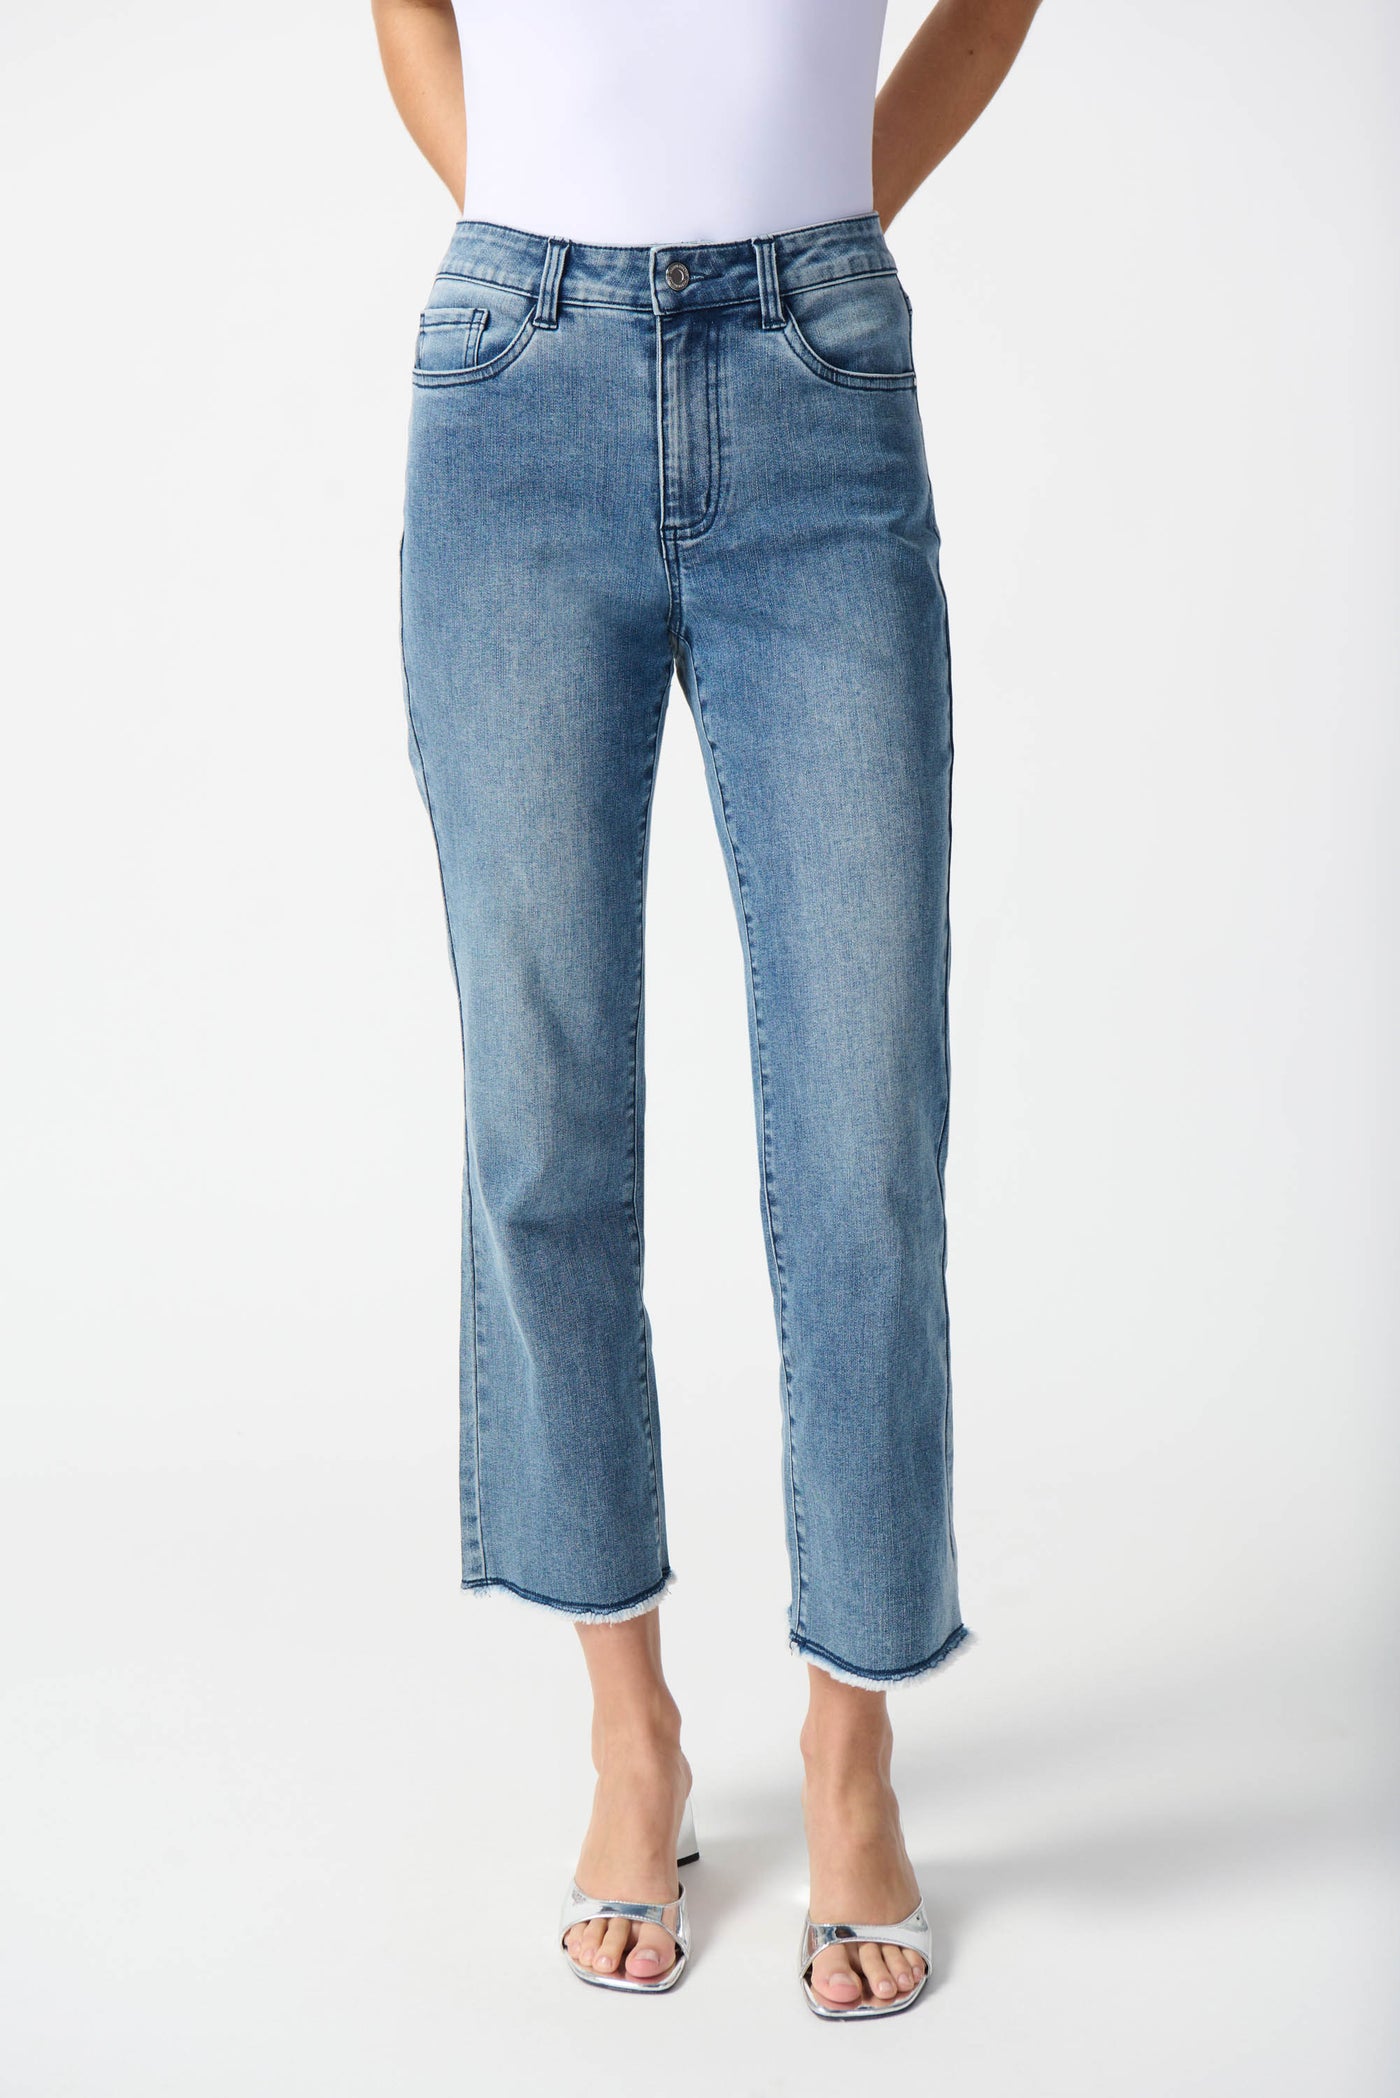 Joseph Ribkoff Medium Blue Denim Frayed Hem Straight Jeans